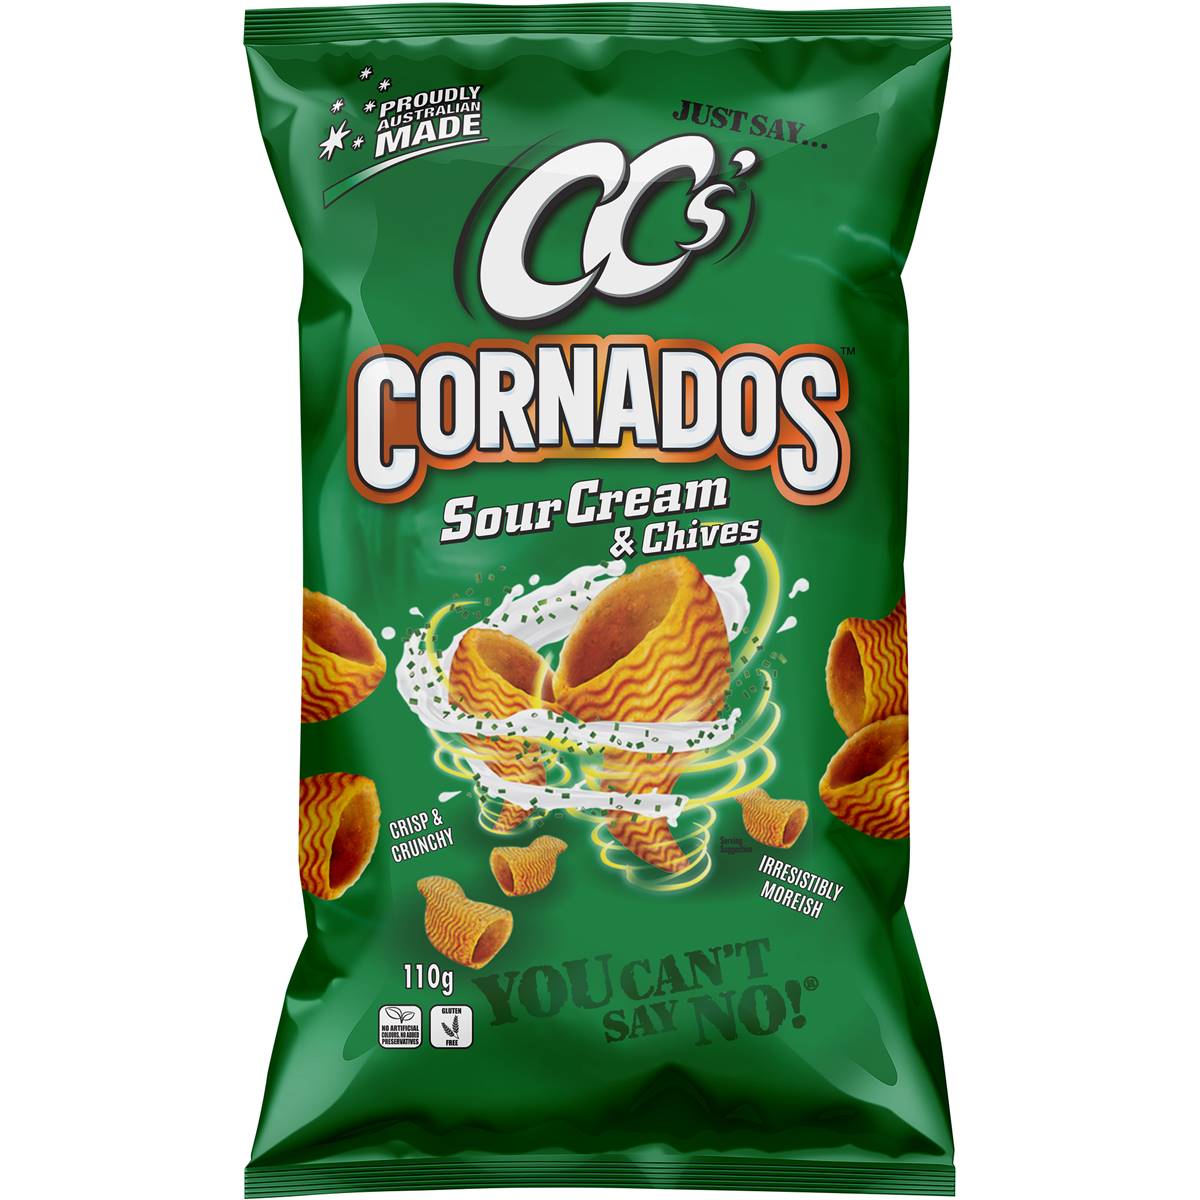 CC's Cornados Corn Chips Sour Cream & Chives 110g